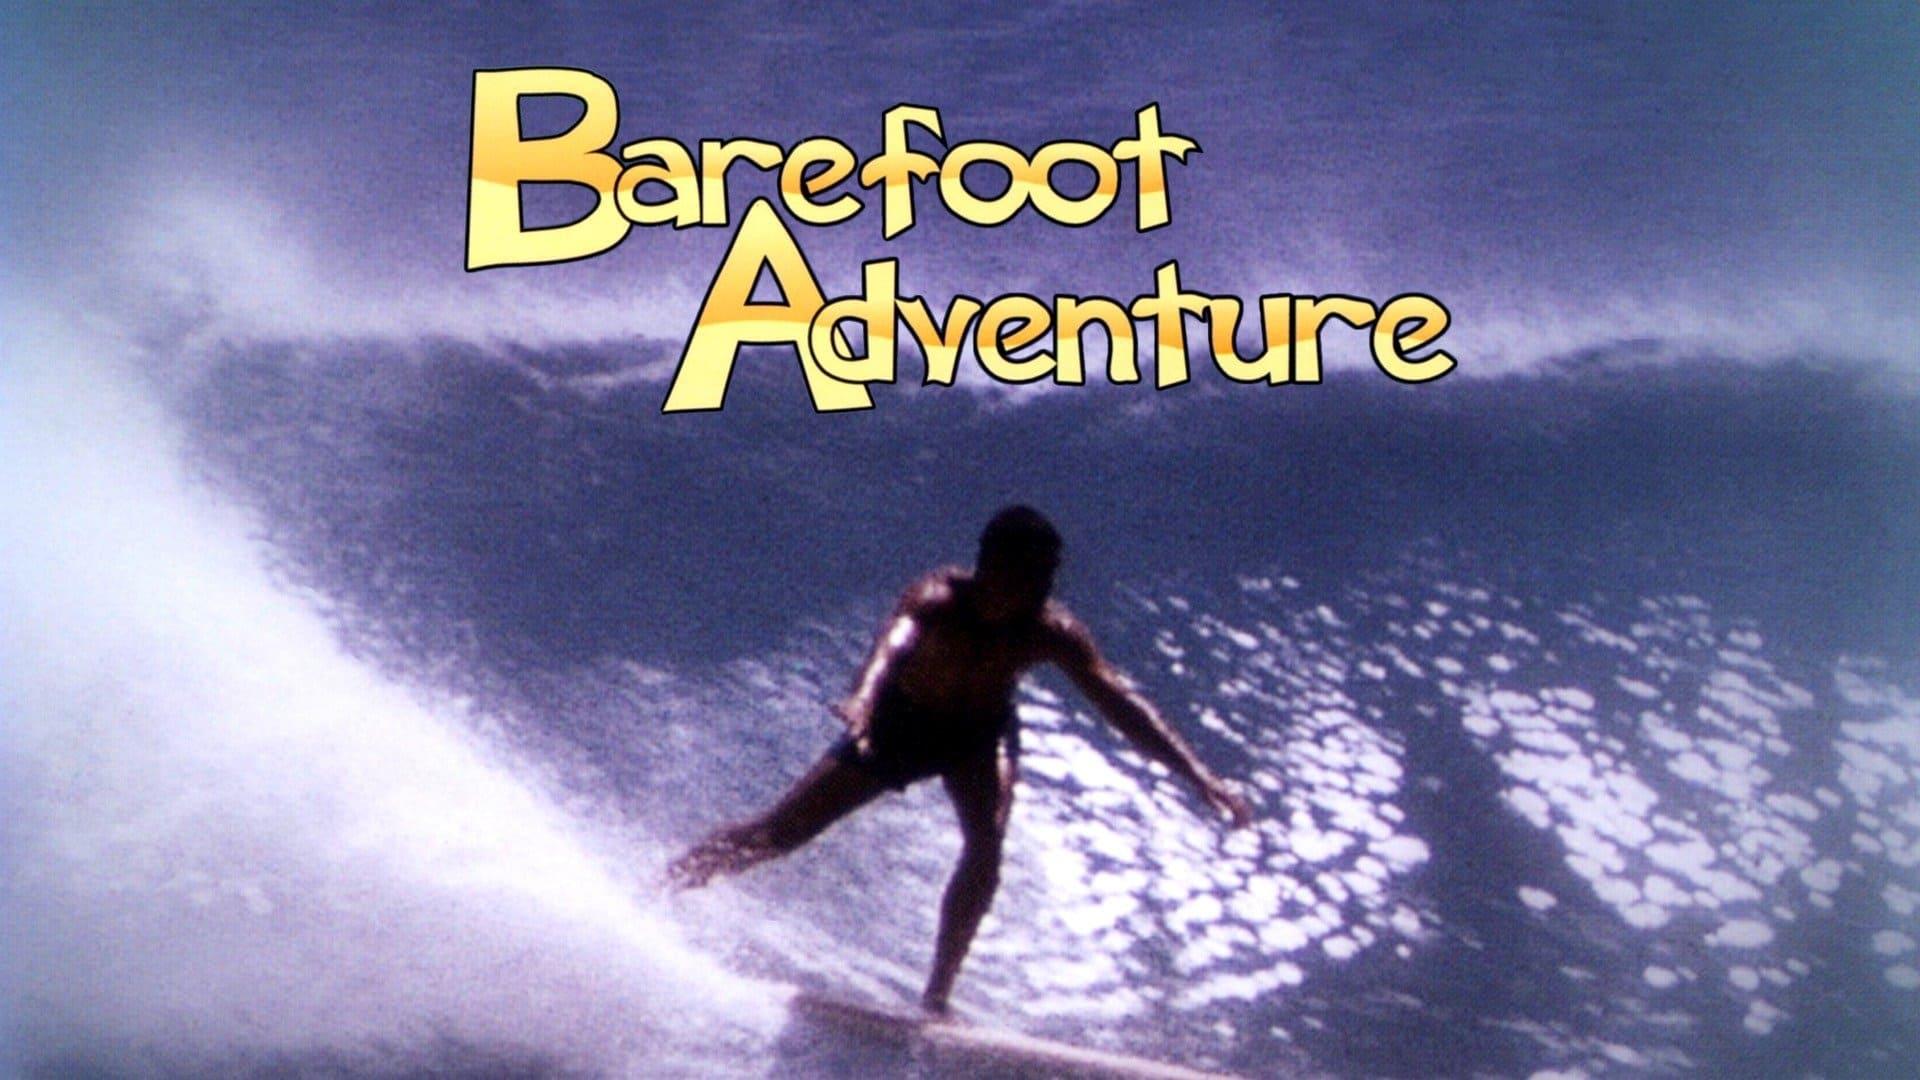 Barefoot Adventure backdrop